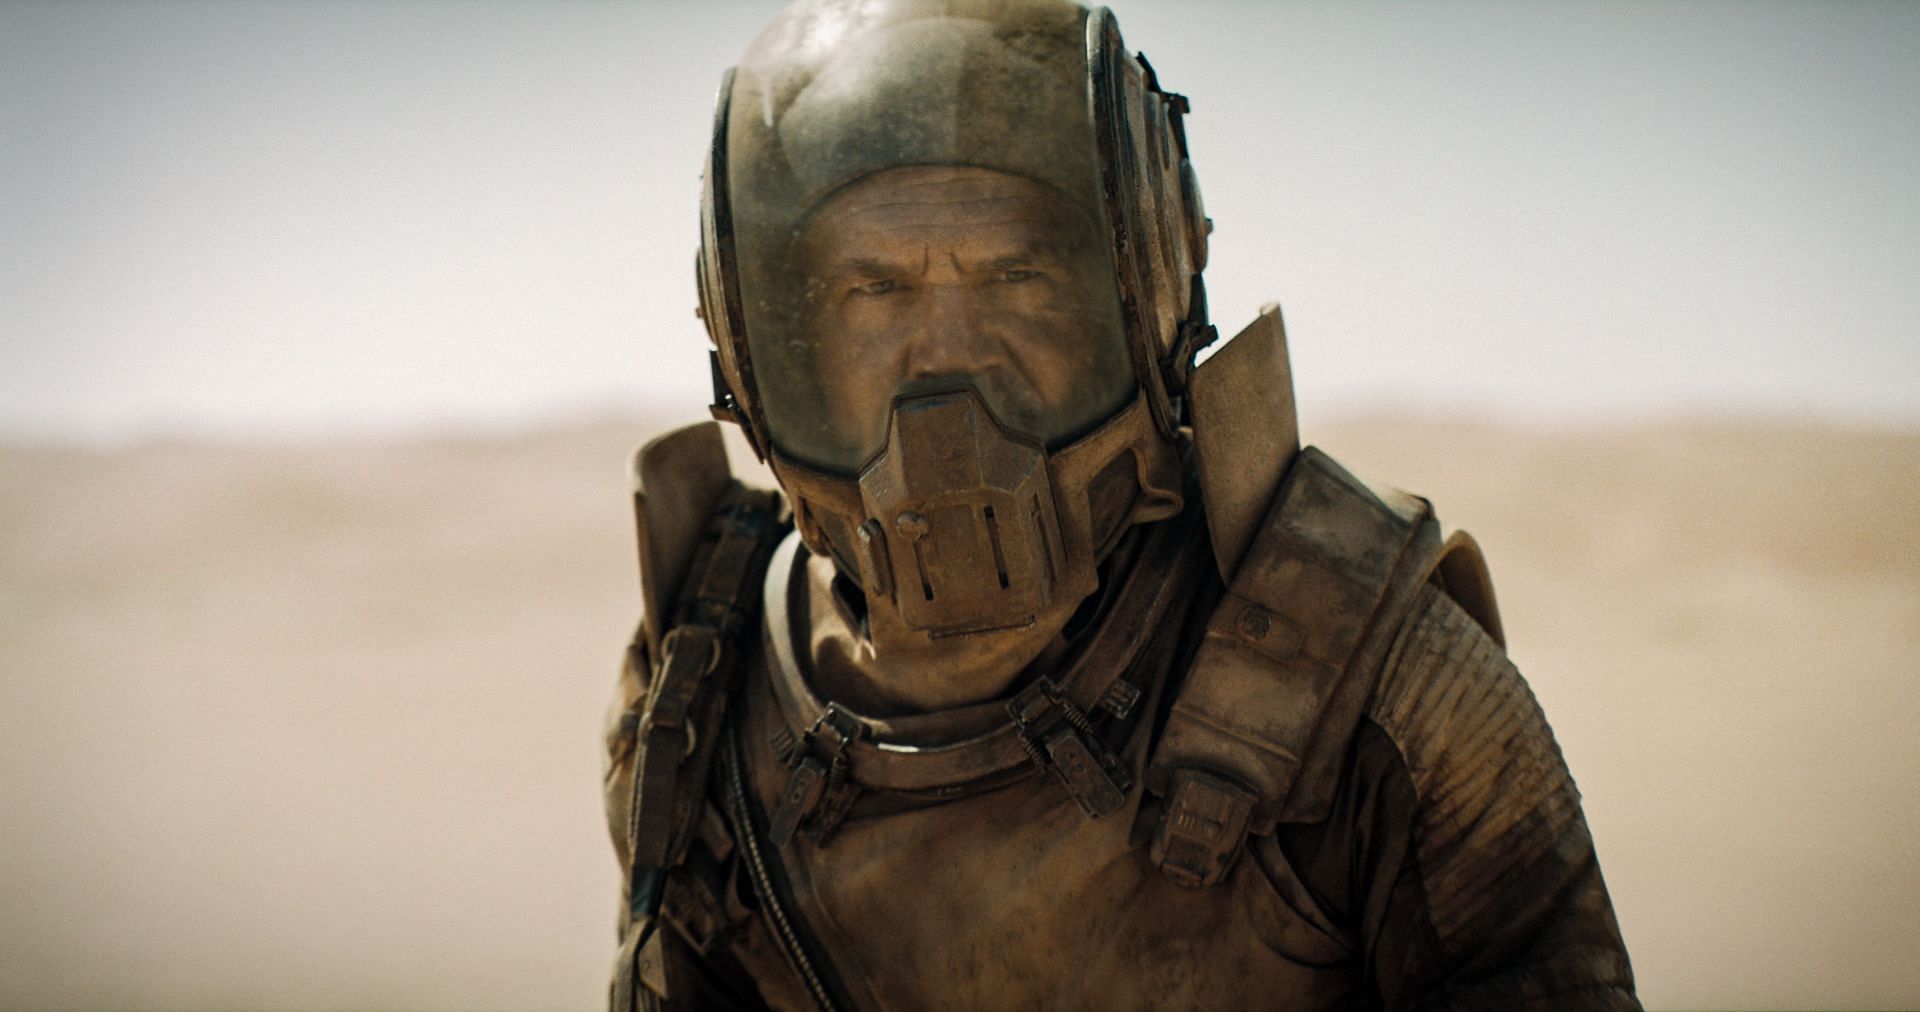 Josh Brolin as Gurney Halleck (image via Warner Bros. Pictures)